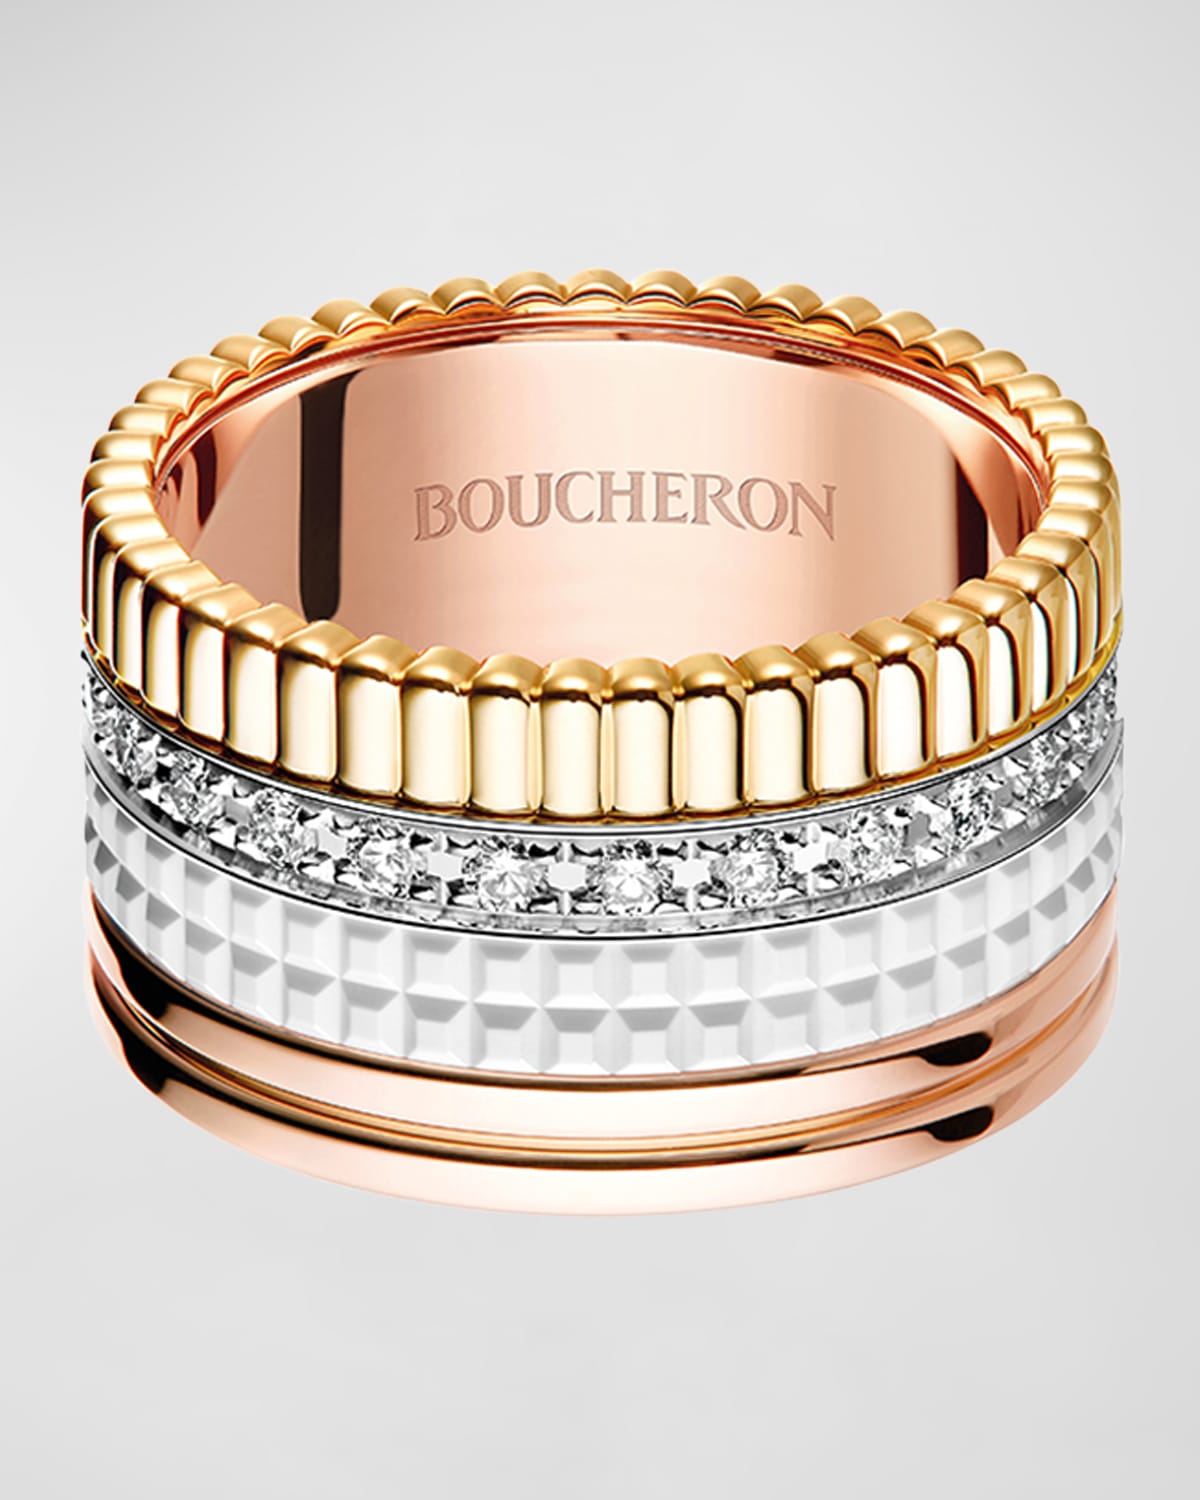 Boucheron Quatre Large 18K Gold & White Ceramic Ring with Diamonds, Size 54